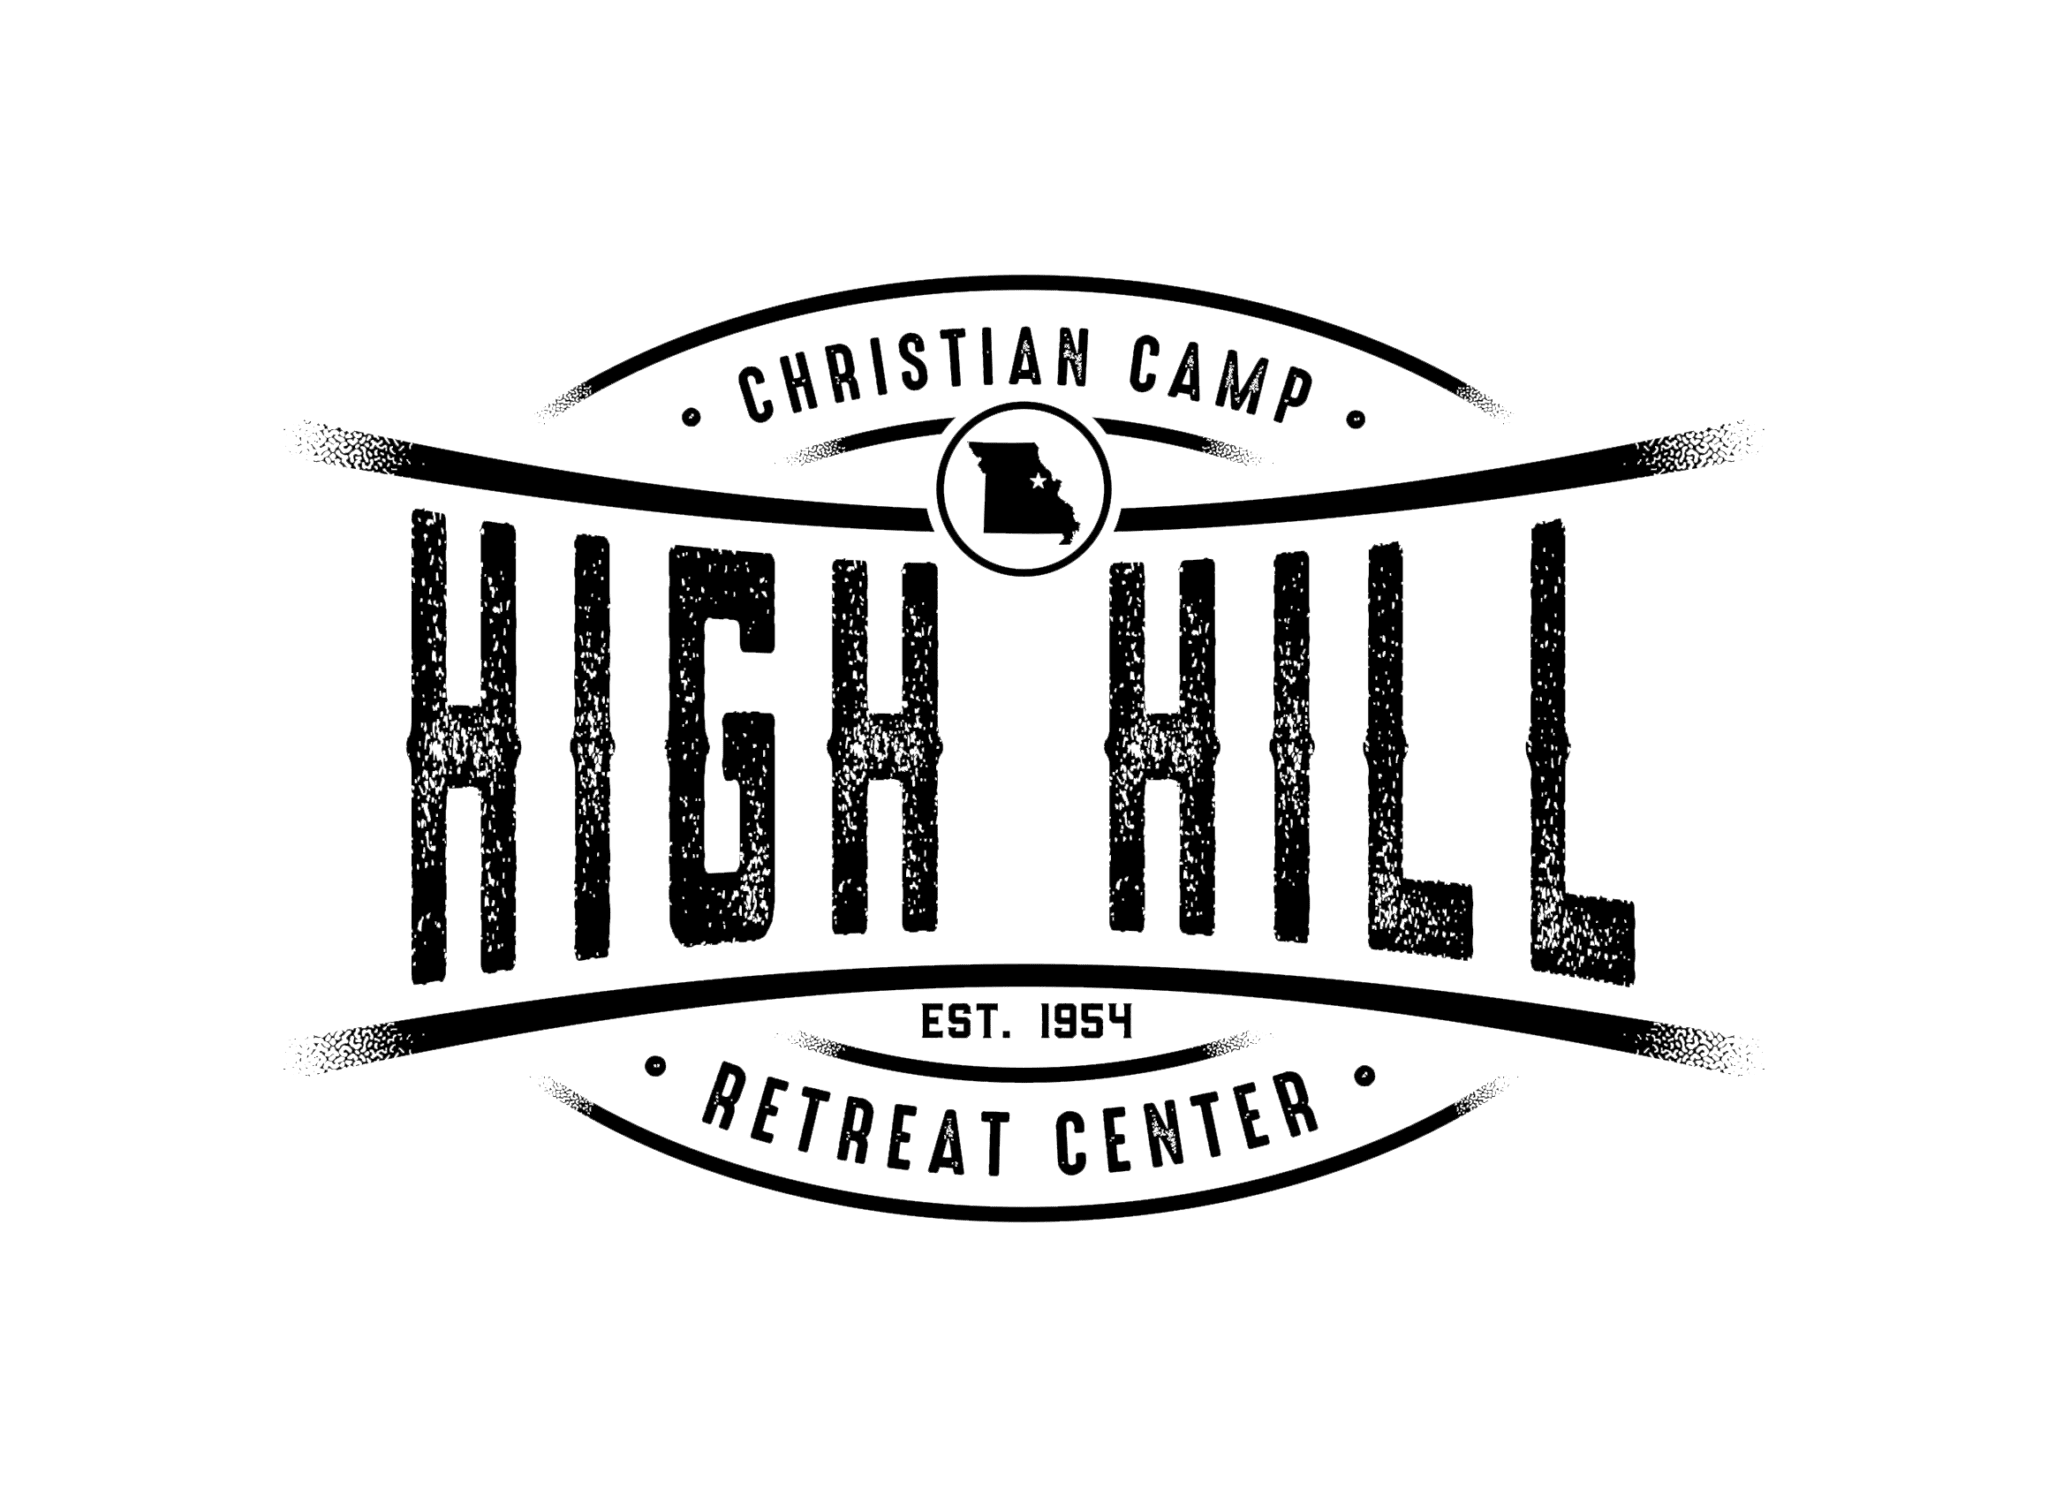 High Hill Christian Camp & Retreat